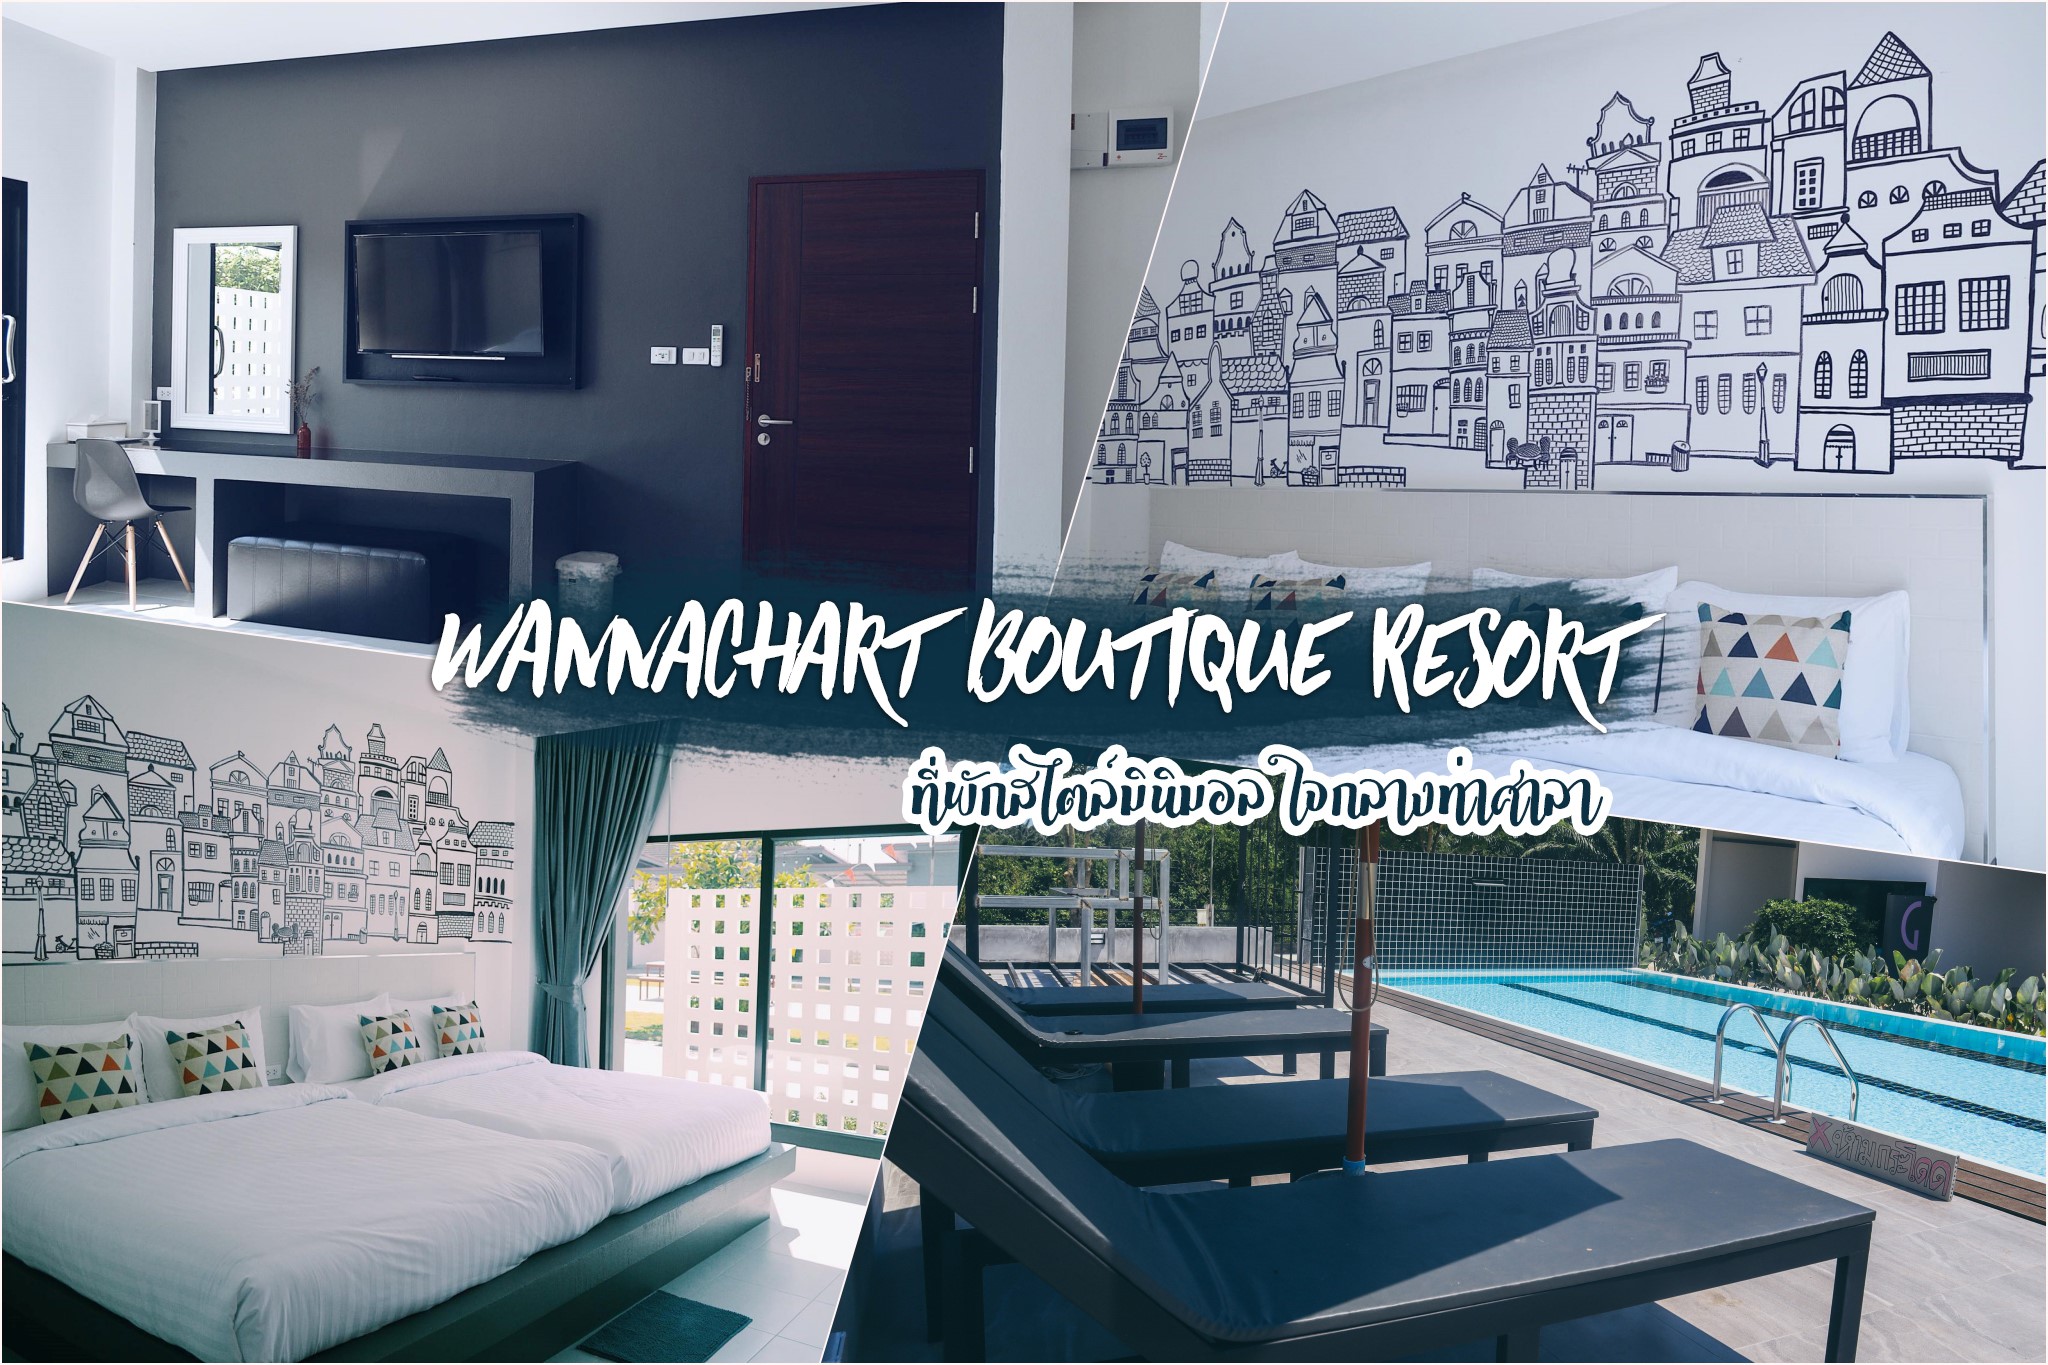  22.-Wannachart-Boutique-Resort-https://nakhonsidee.com/show/read/4/157
 checkin,nakhonsithammarat,ของกิน,ร้านอาหาร,จุดเช็คอิน,ที่เที่ยว